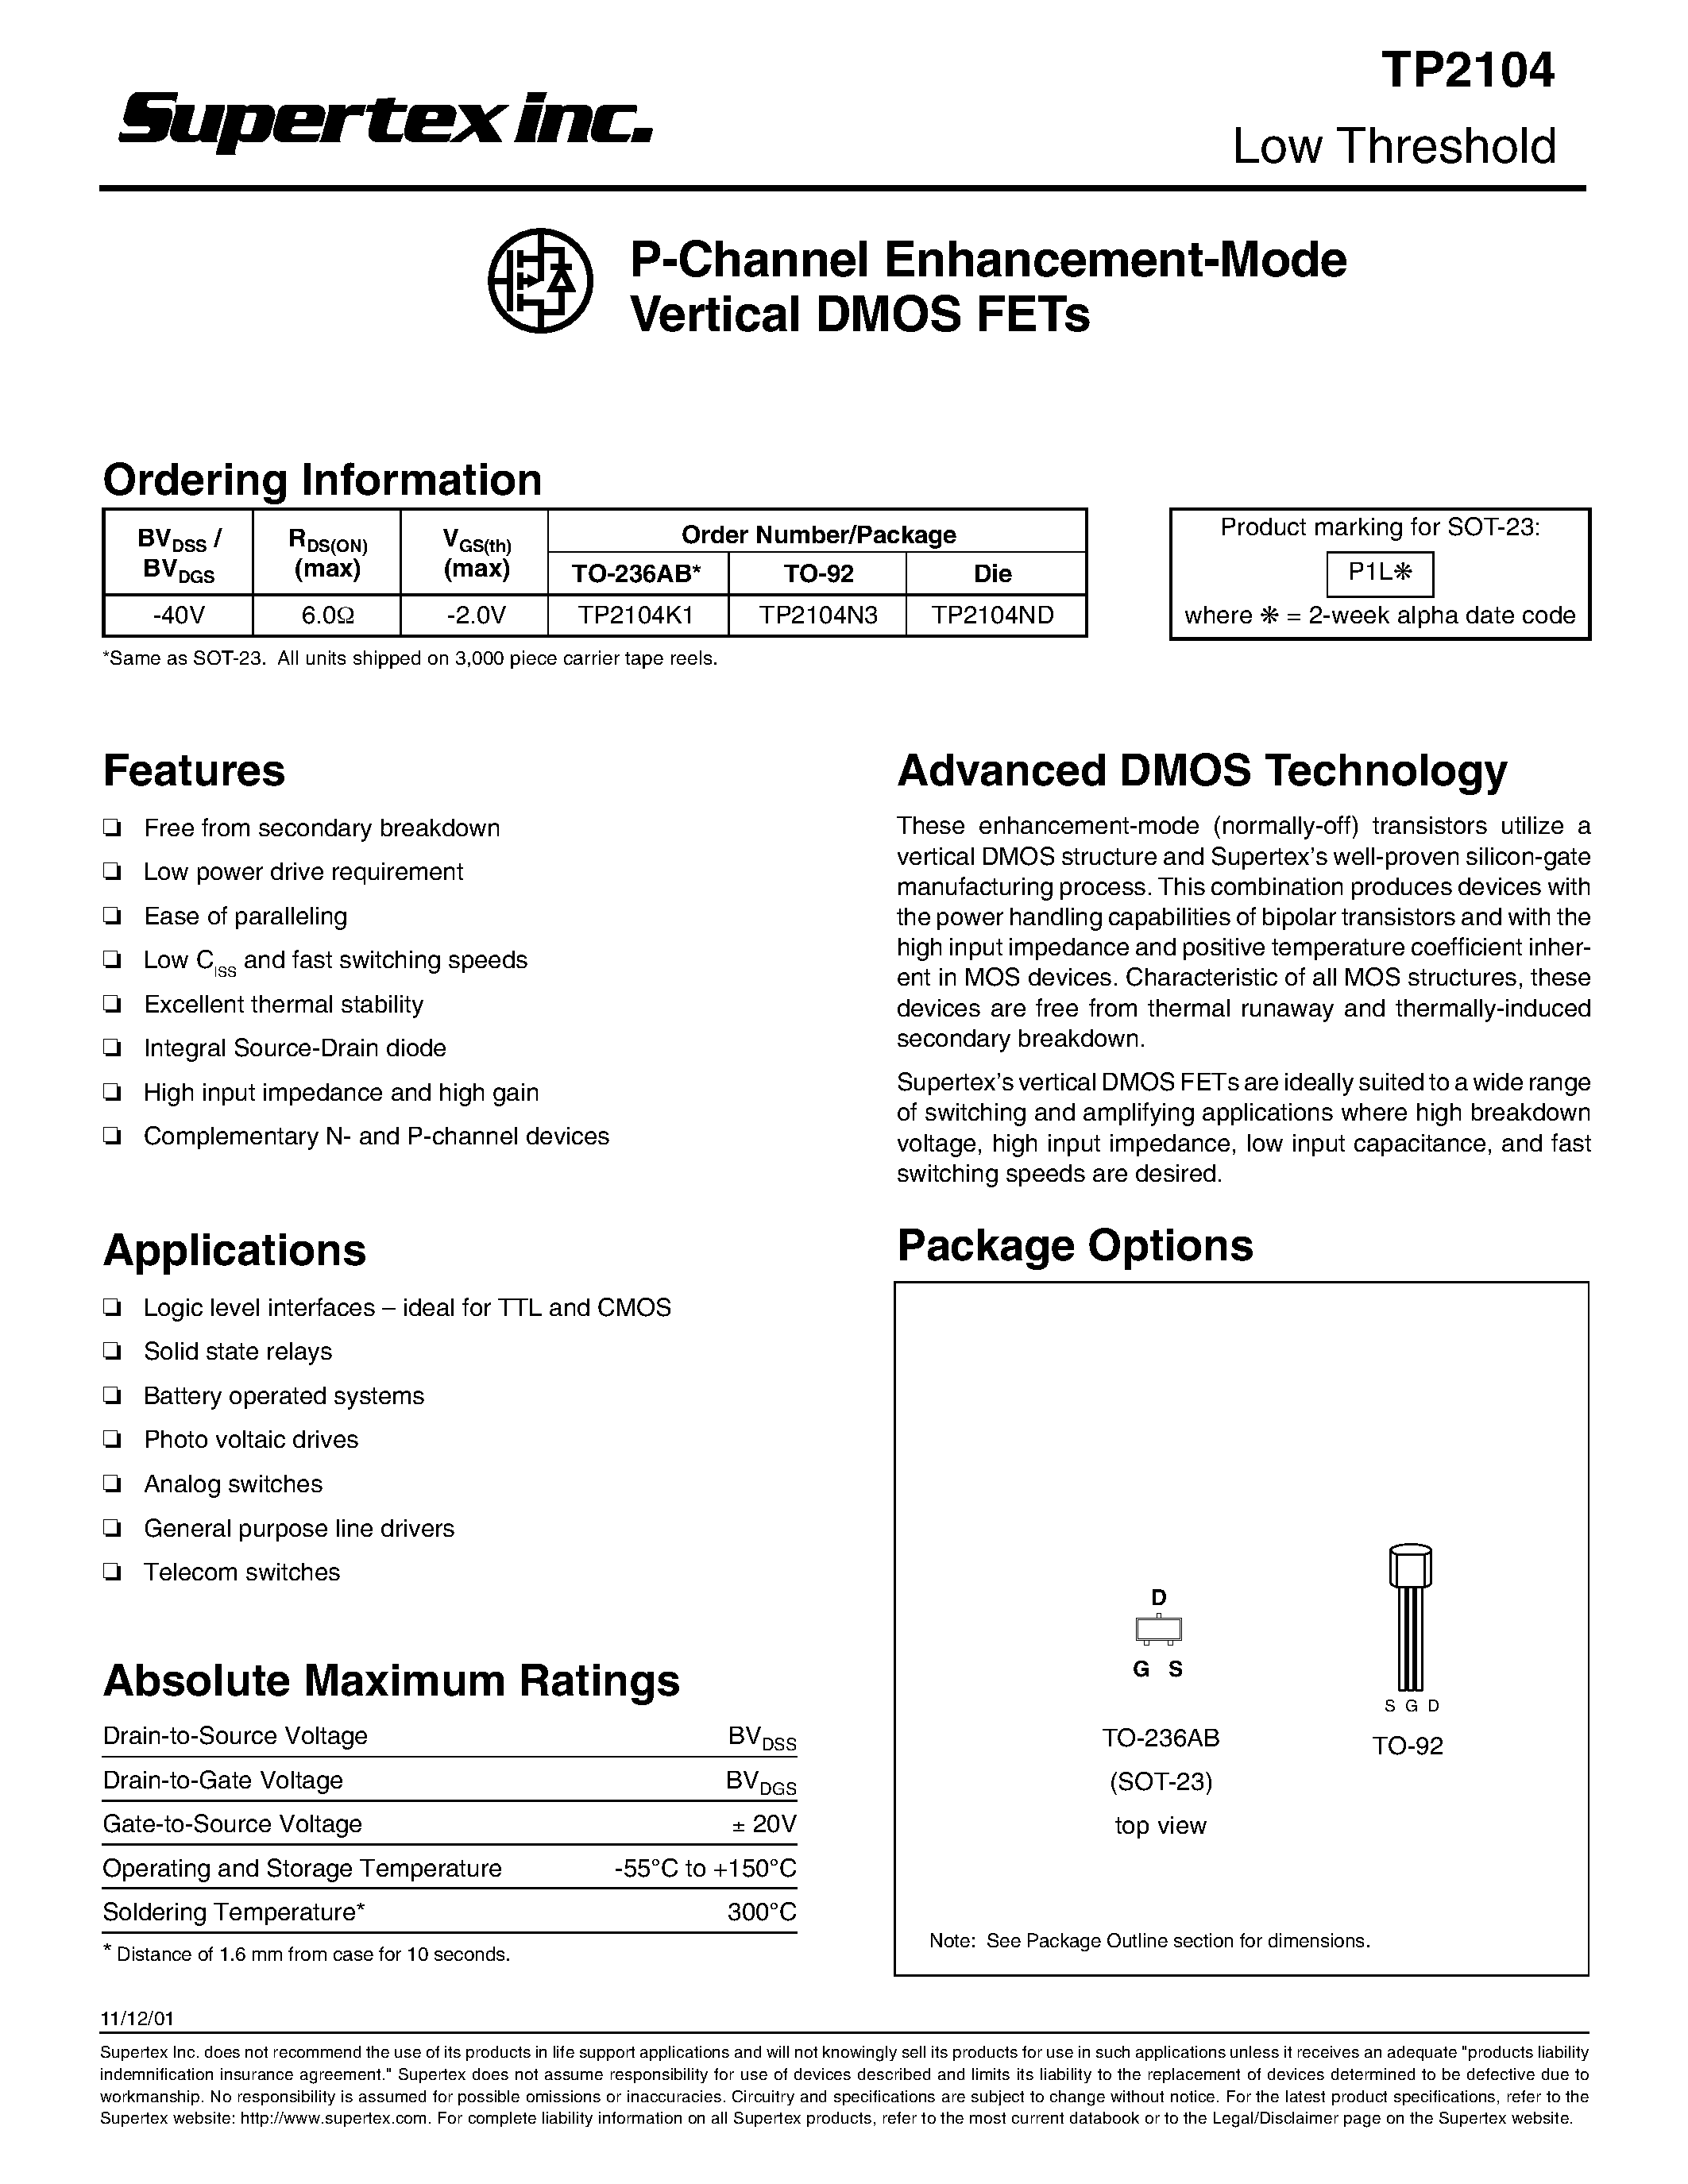 Datasheet TP2104N3 - P-Channel Enhancement-Mode Vertical DMOS FETs page 1